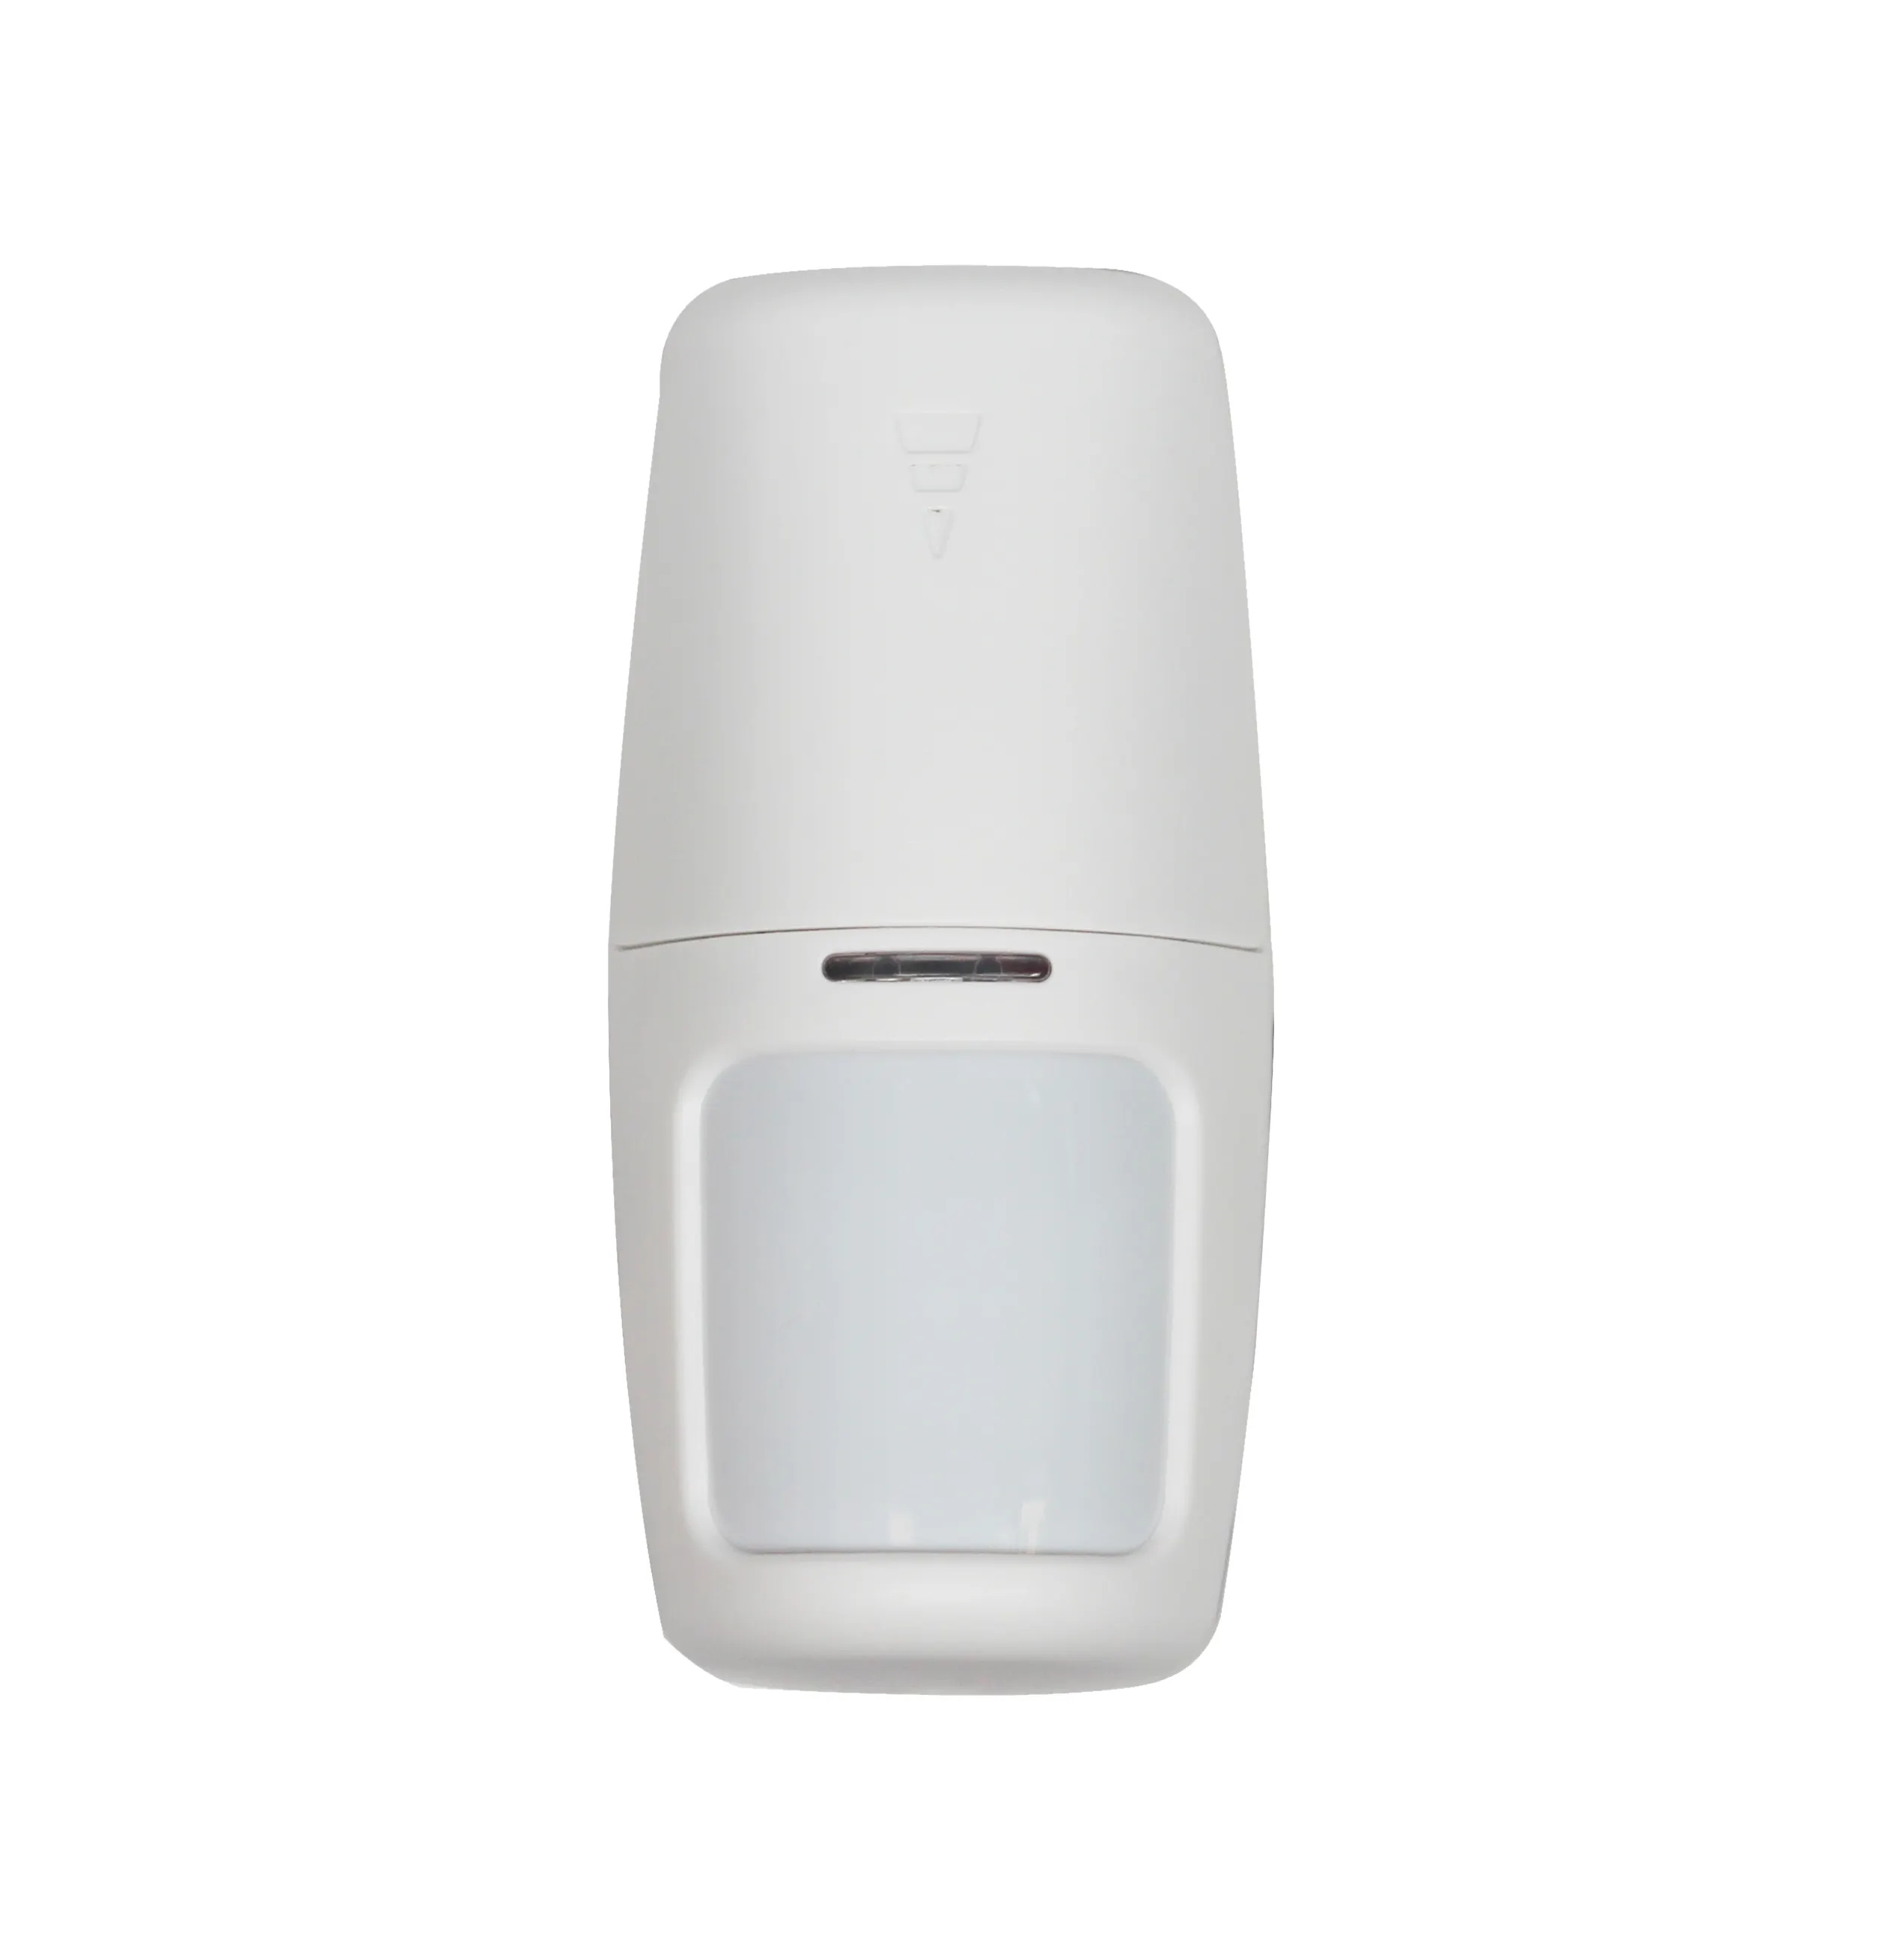 Wale Wireless PIR Motion Sensor For Home Security Alarm